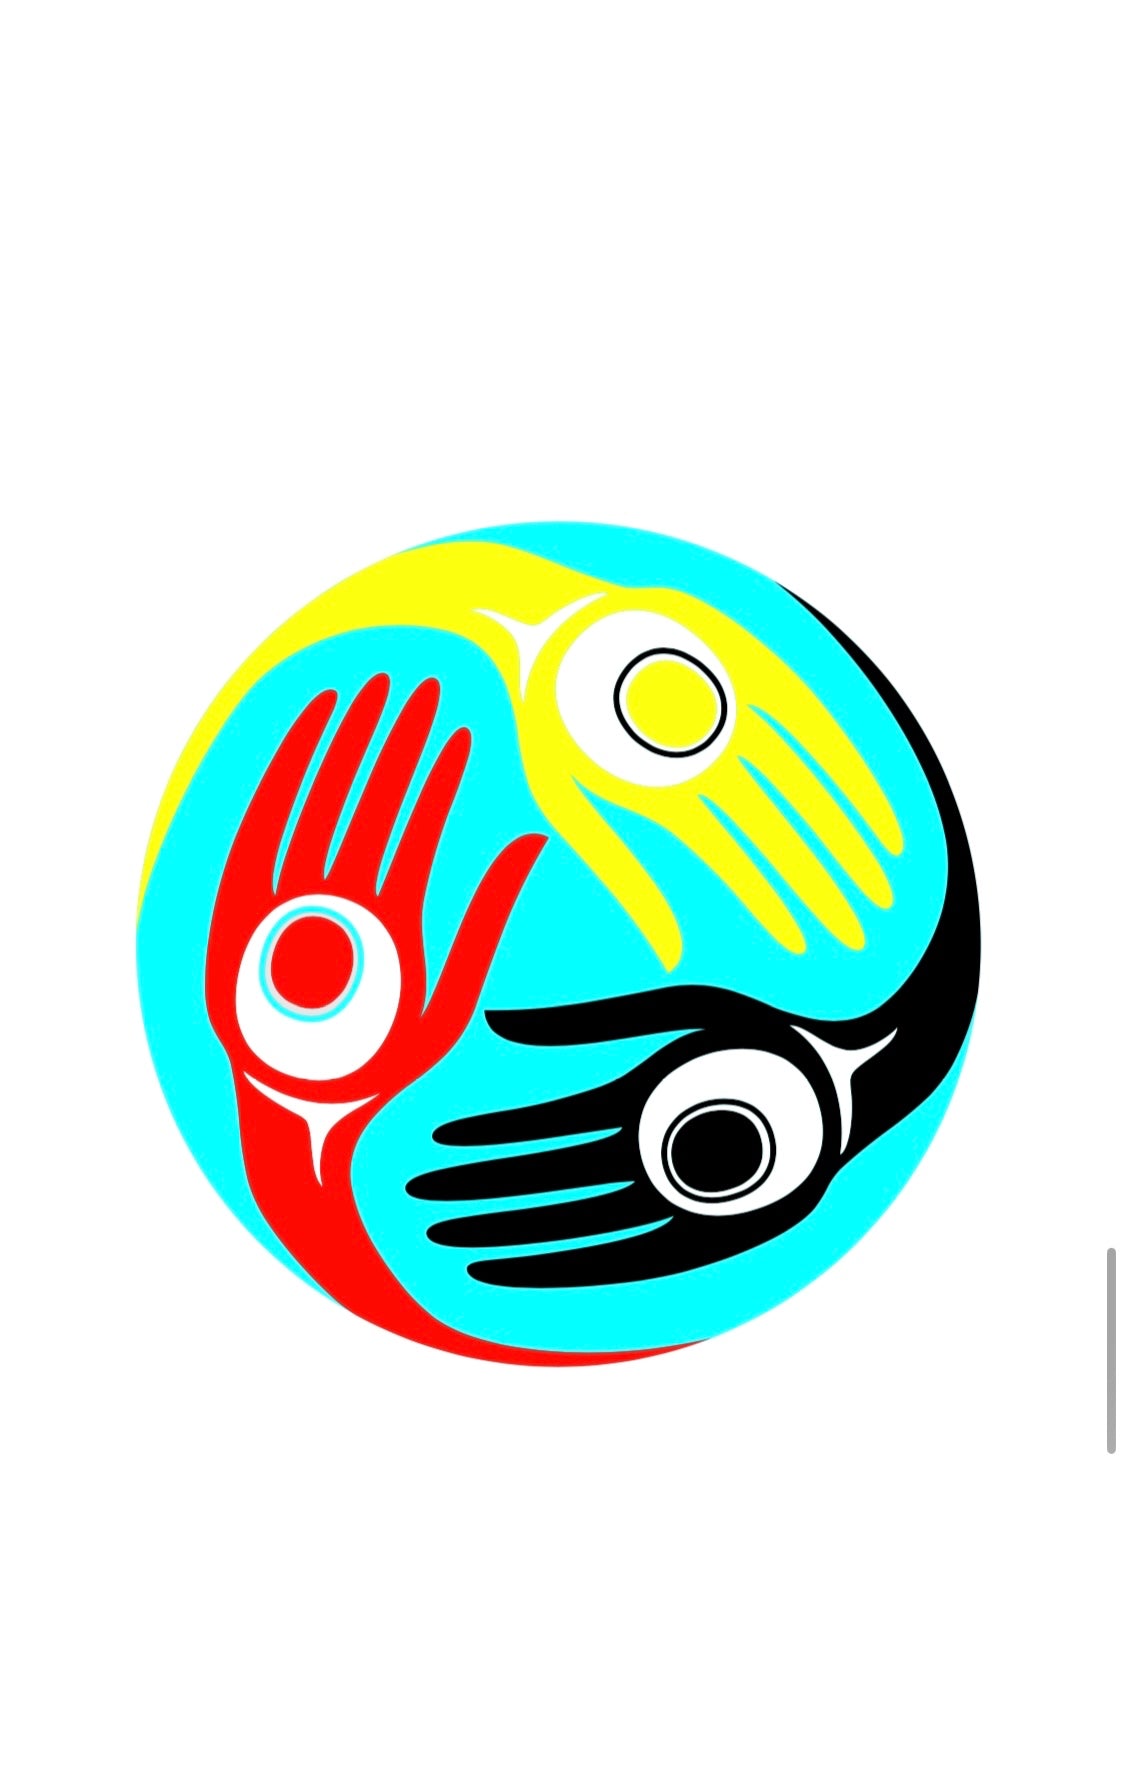 Denver Indian Centre Logo